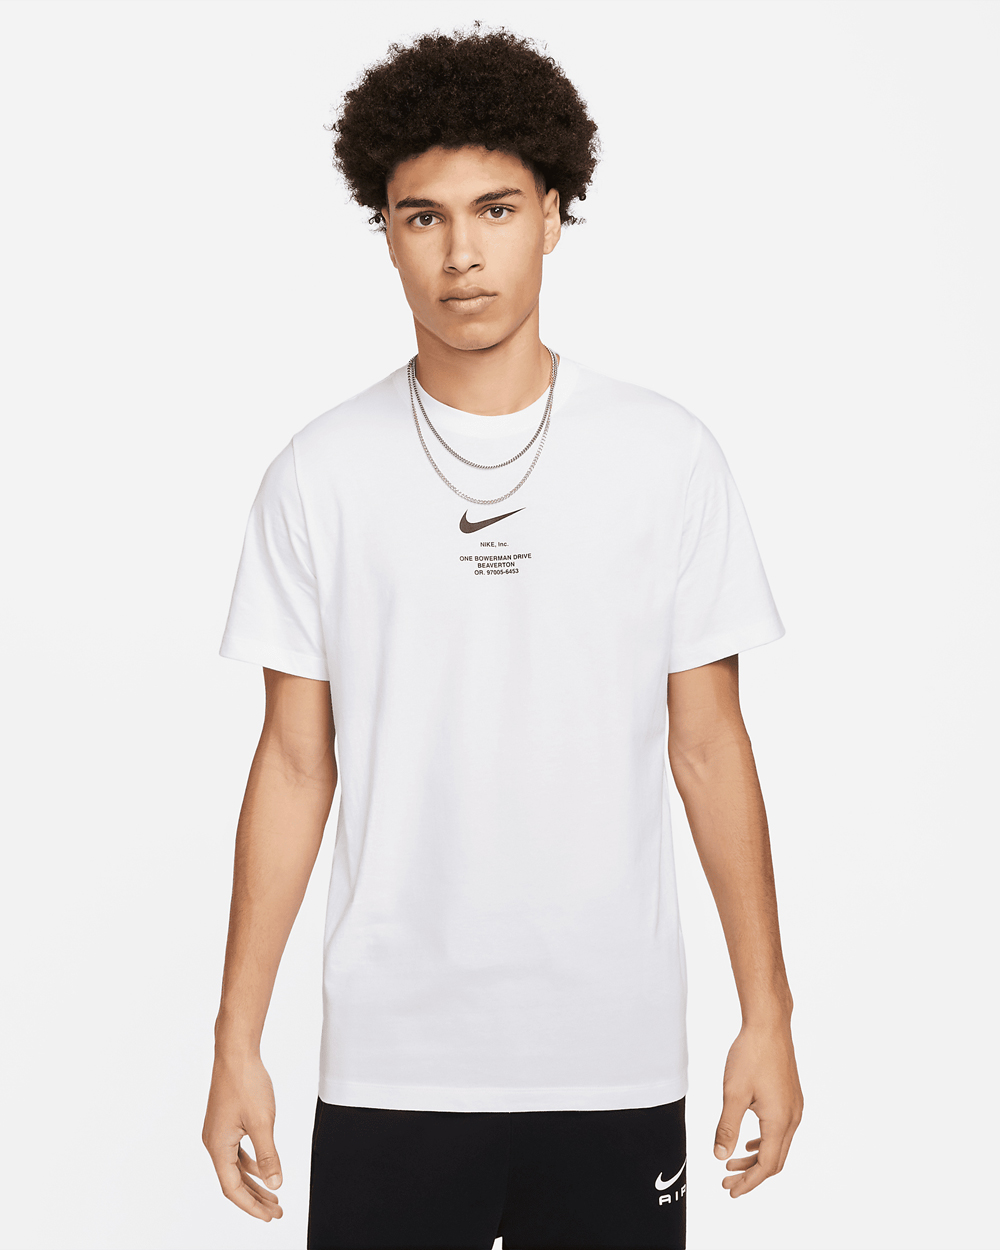 Nike-Sportswear-T-Shirt-White-Black-1